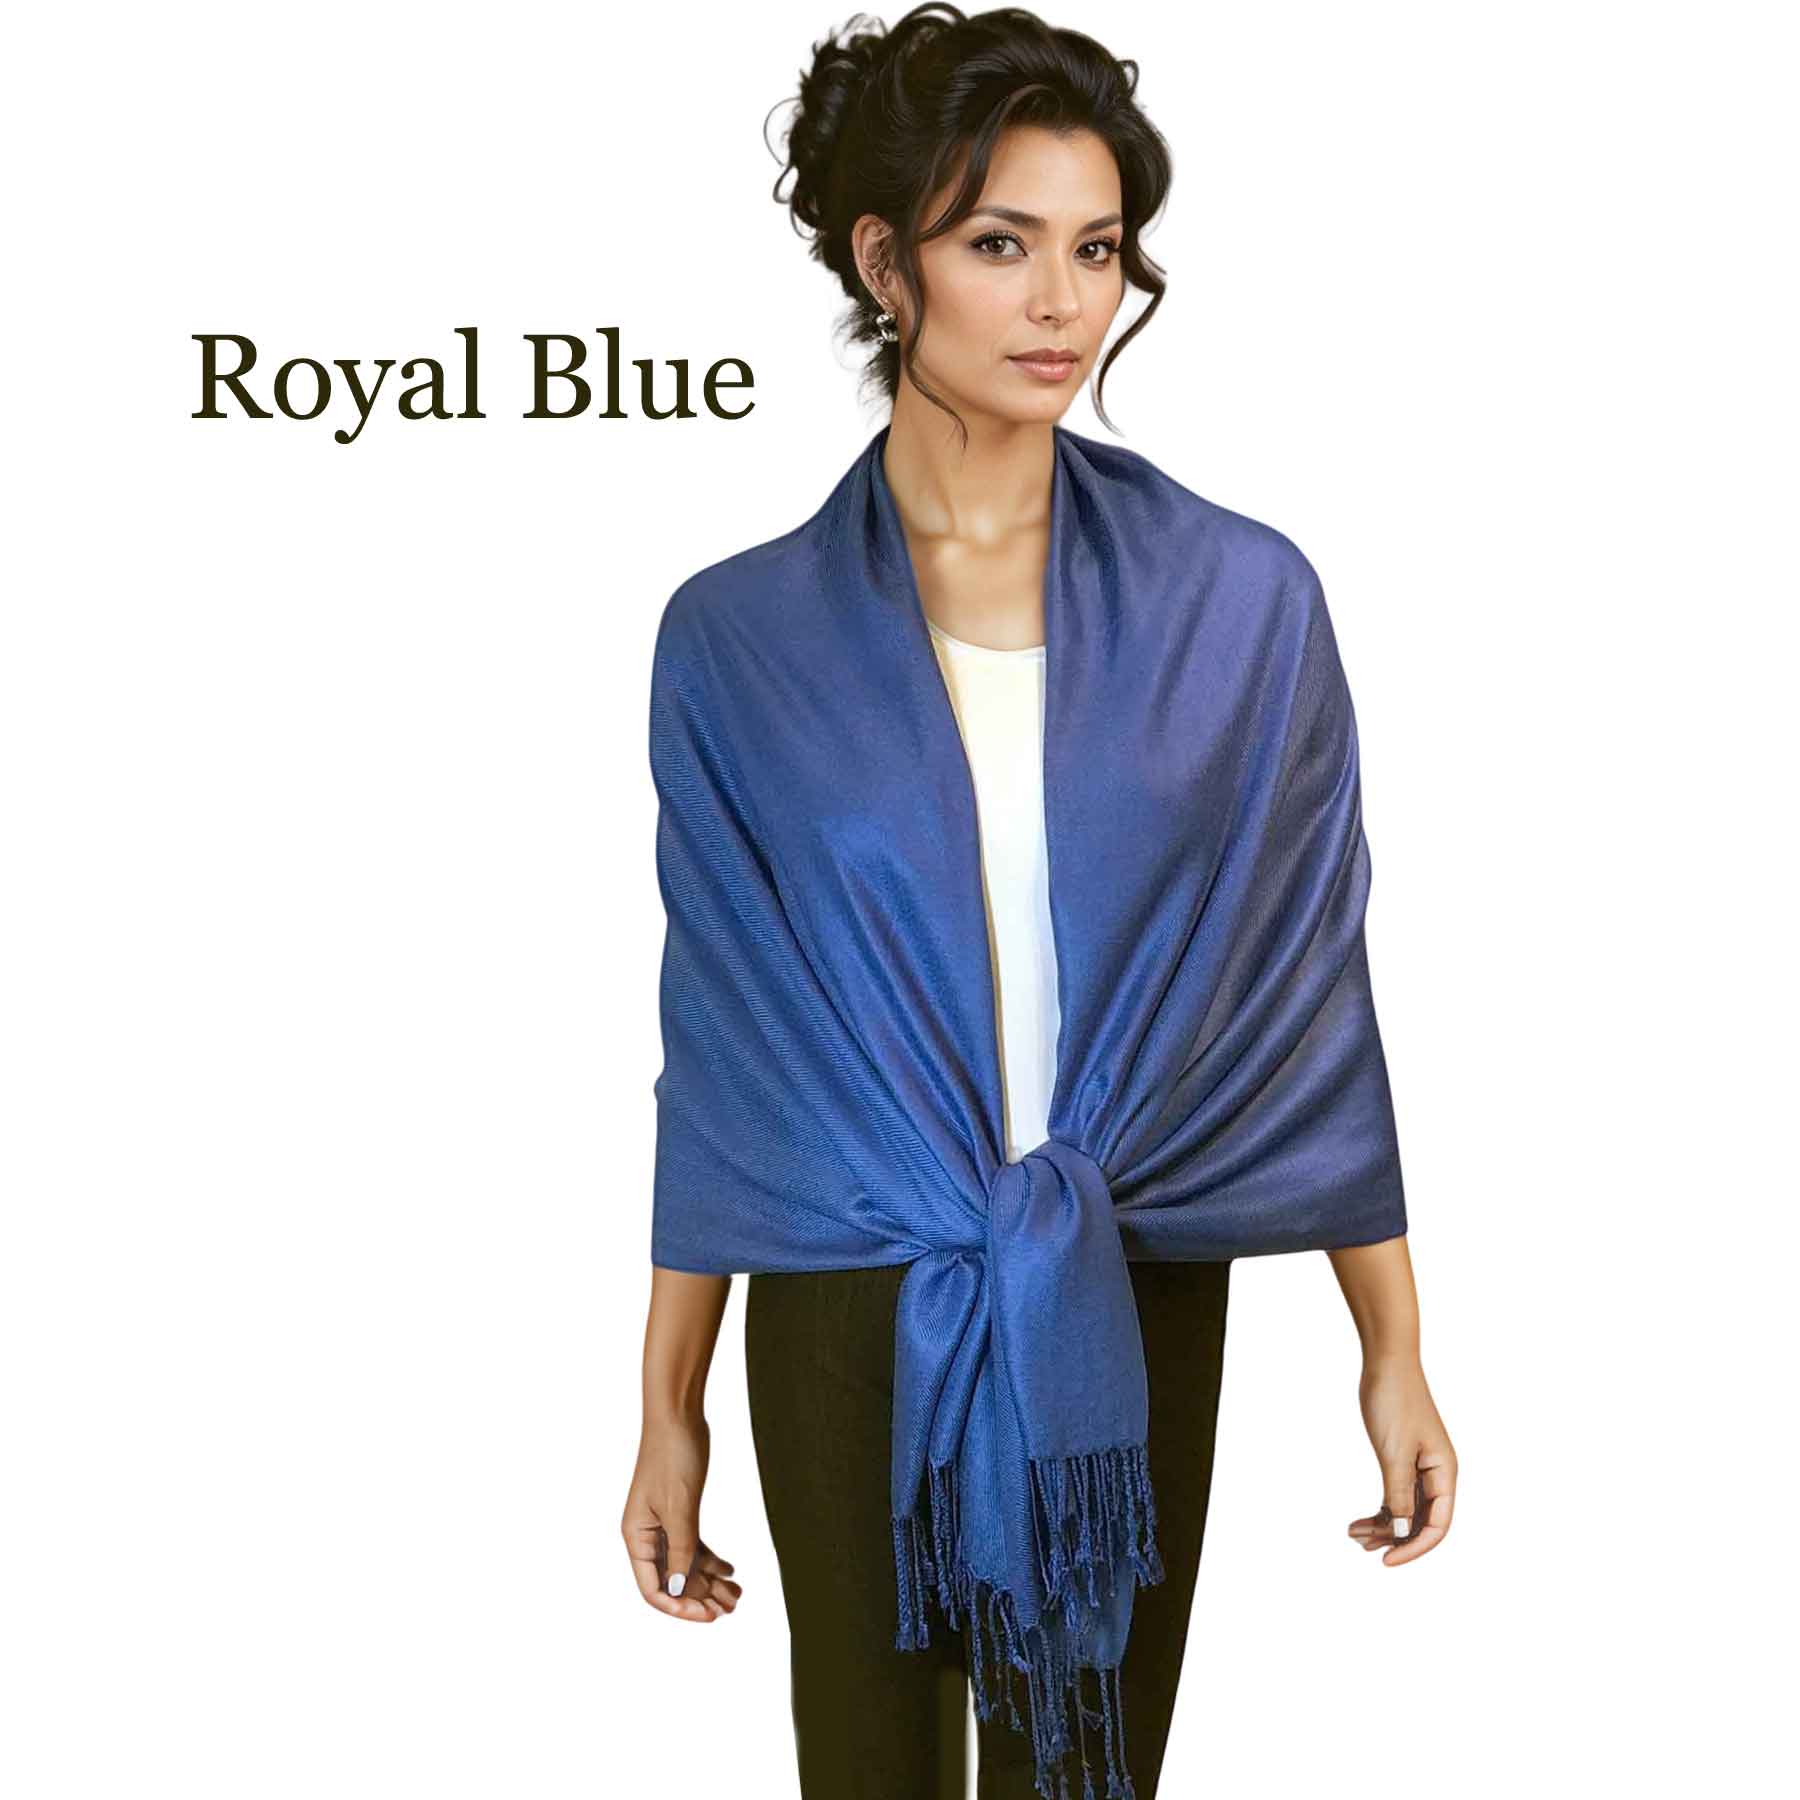 Royal Blue #34<br>
Pashmina Style Shawl